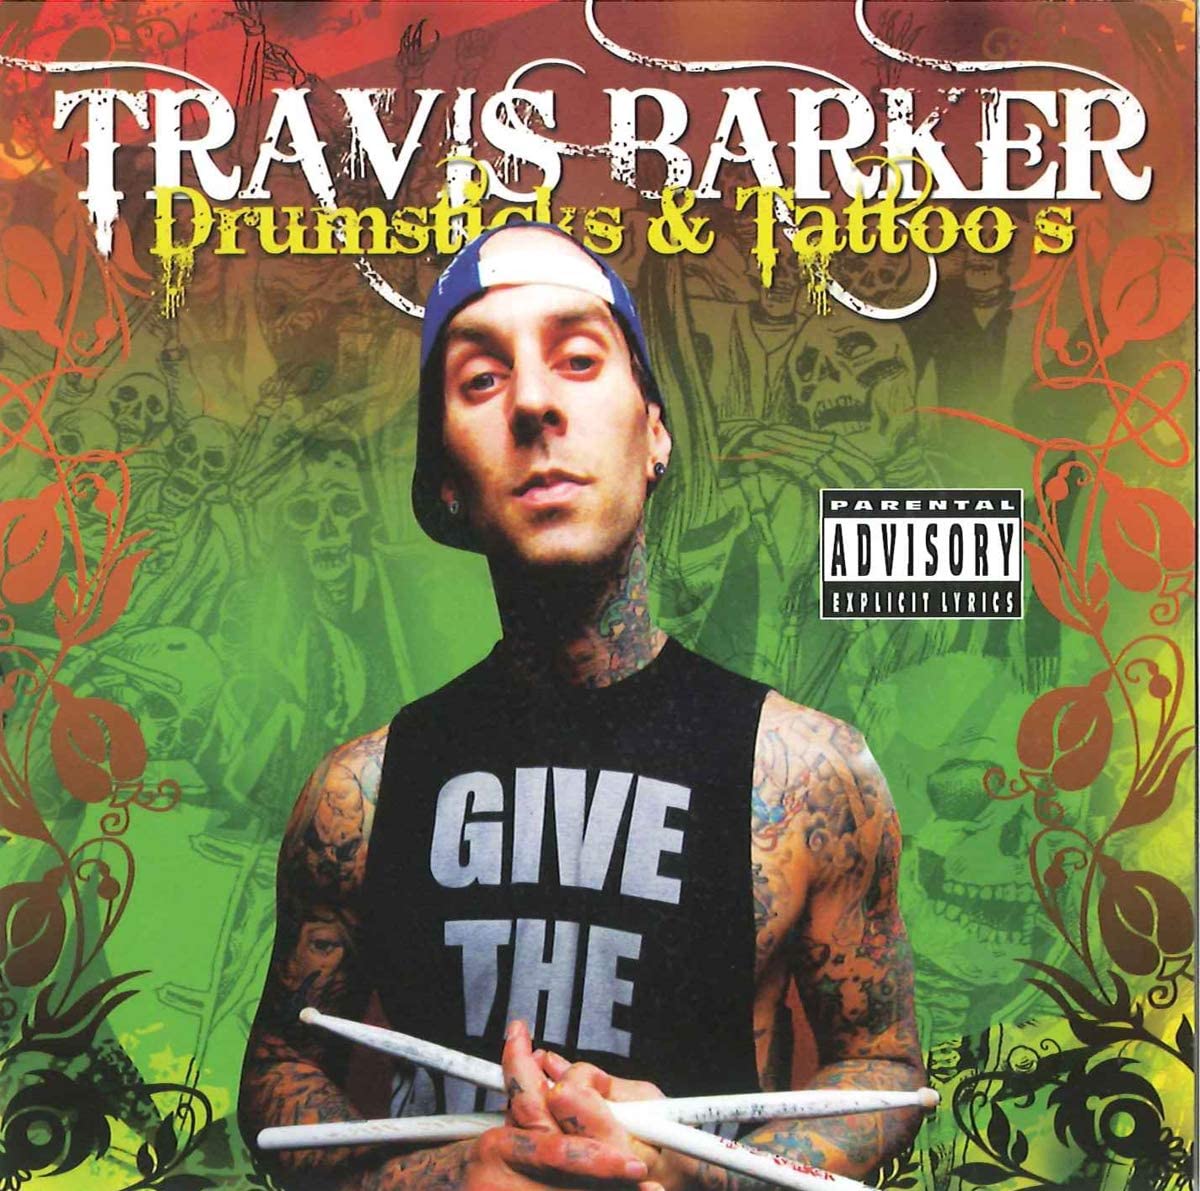 Drumsticks & Tattoos [Audio CD] Travis Barker